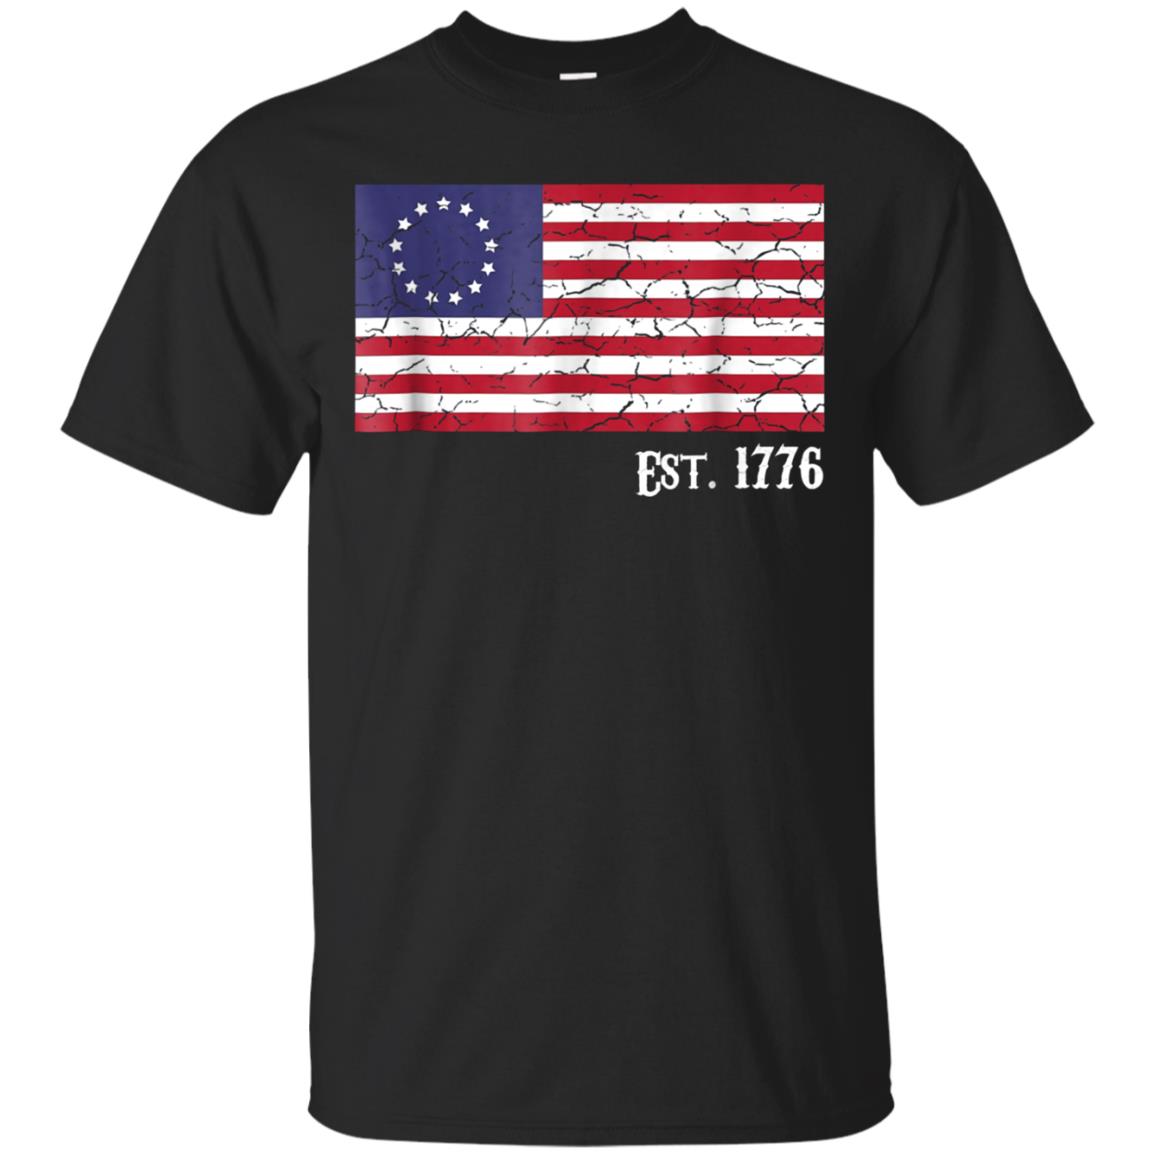 13 Colonies shirt - 1776 Independence Revolutionary War Tee